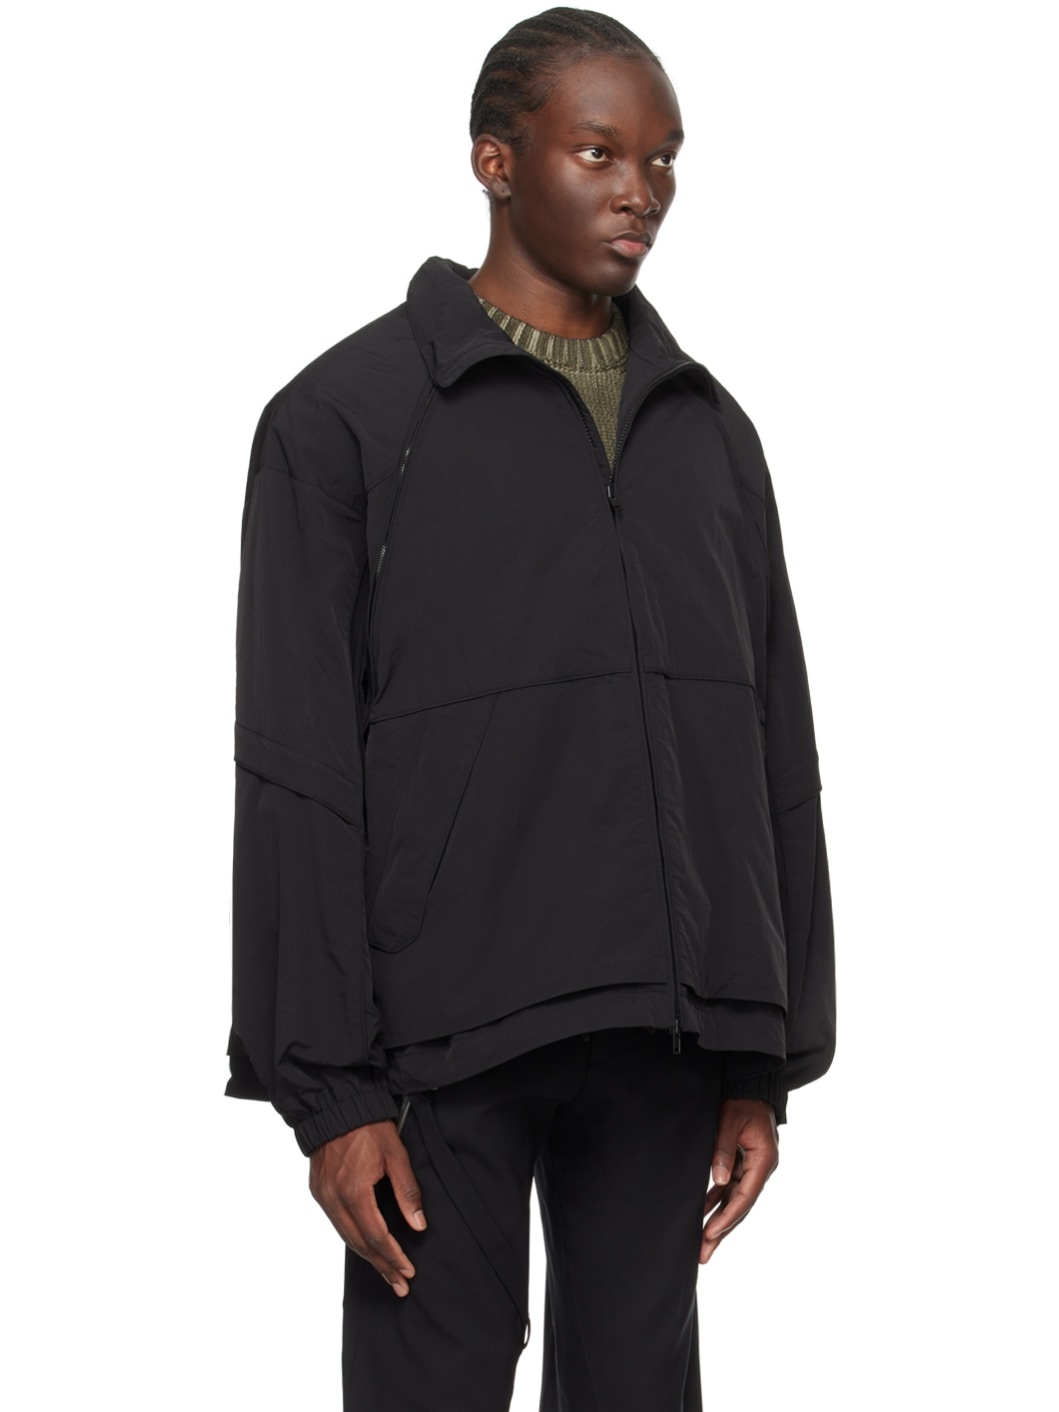 Black Detachable Sleeve Jacket - 2